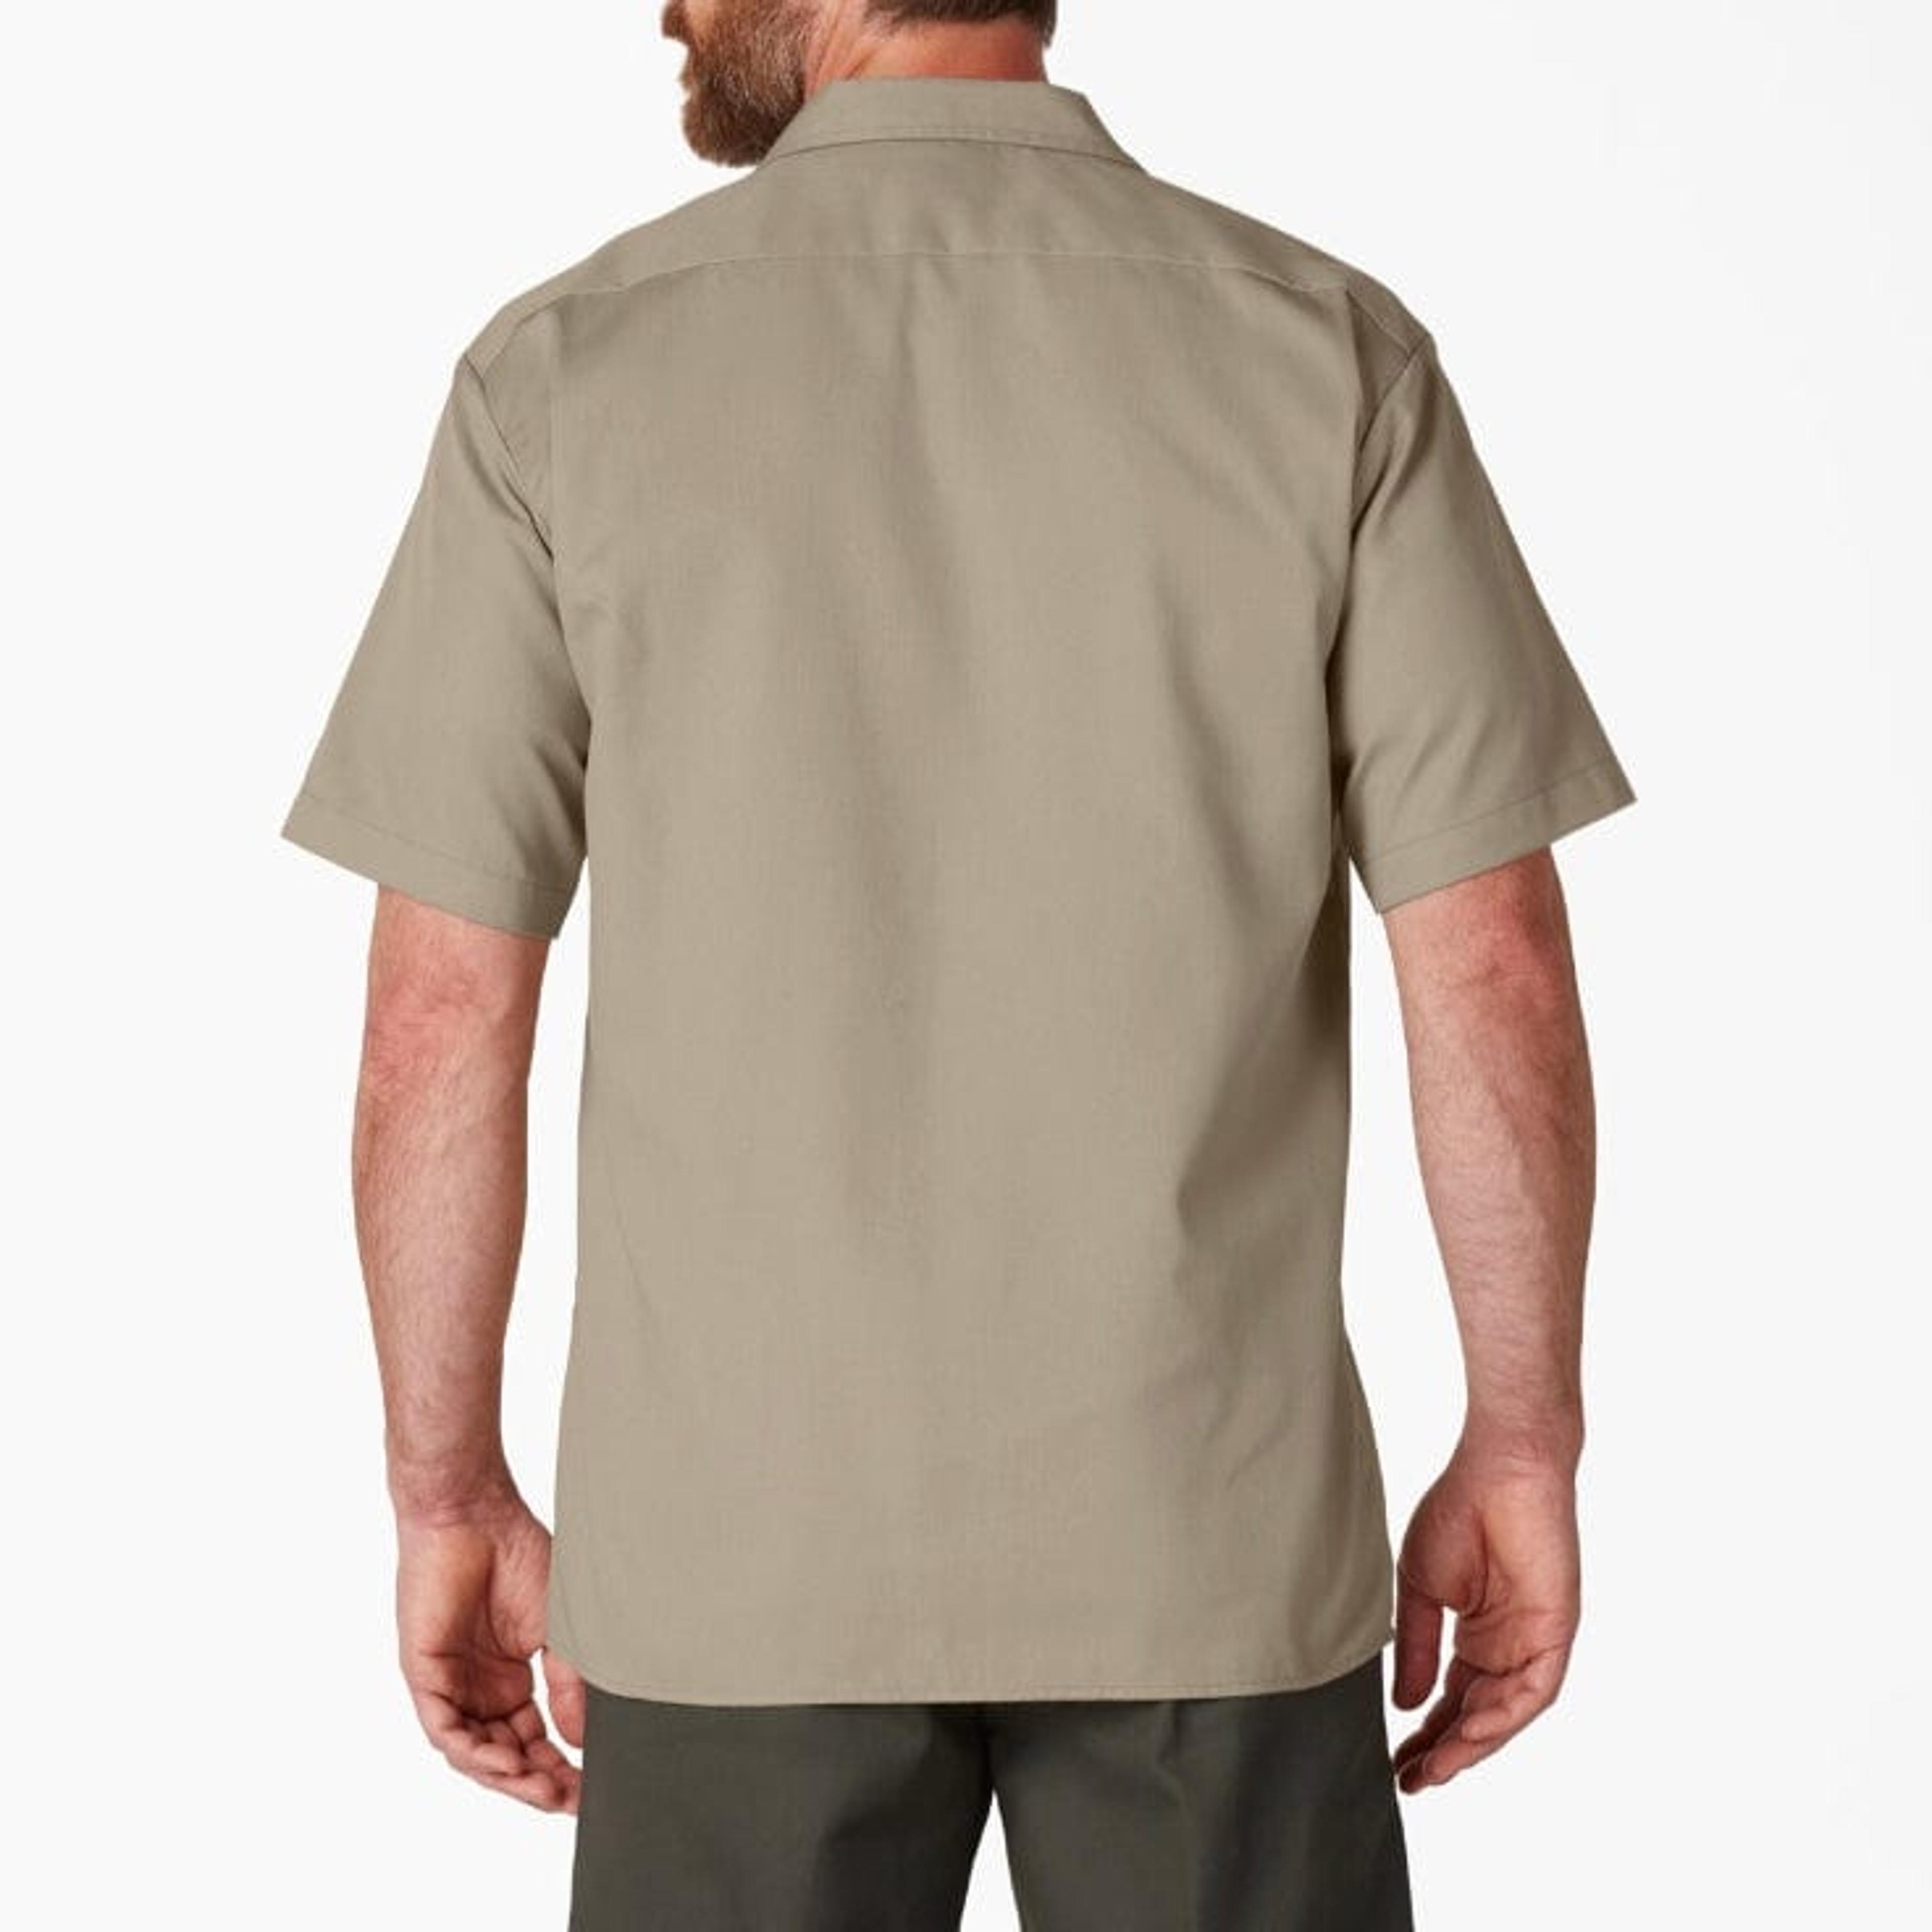 Alternate View 2 of Dickies Short Sleeve Twill Work Shirt (Desert Khaki) 1574DS